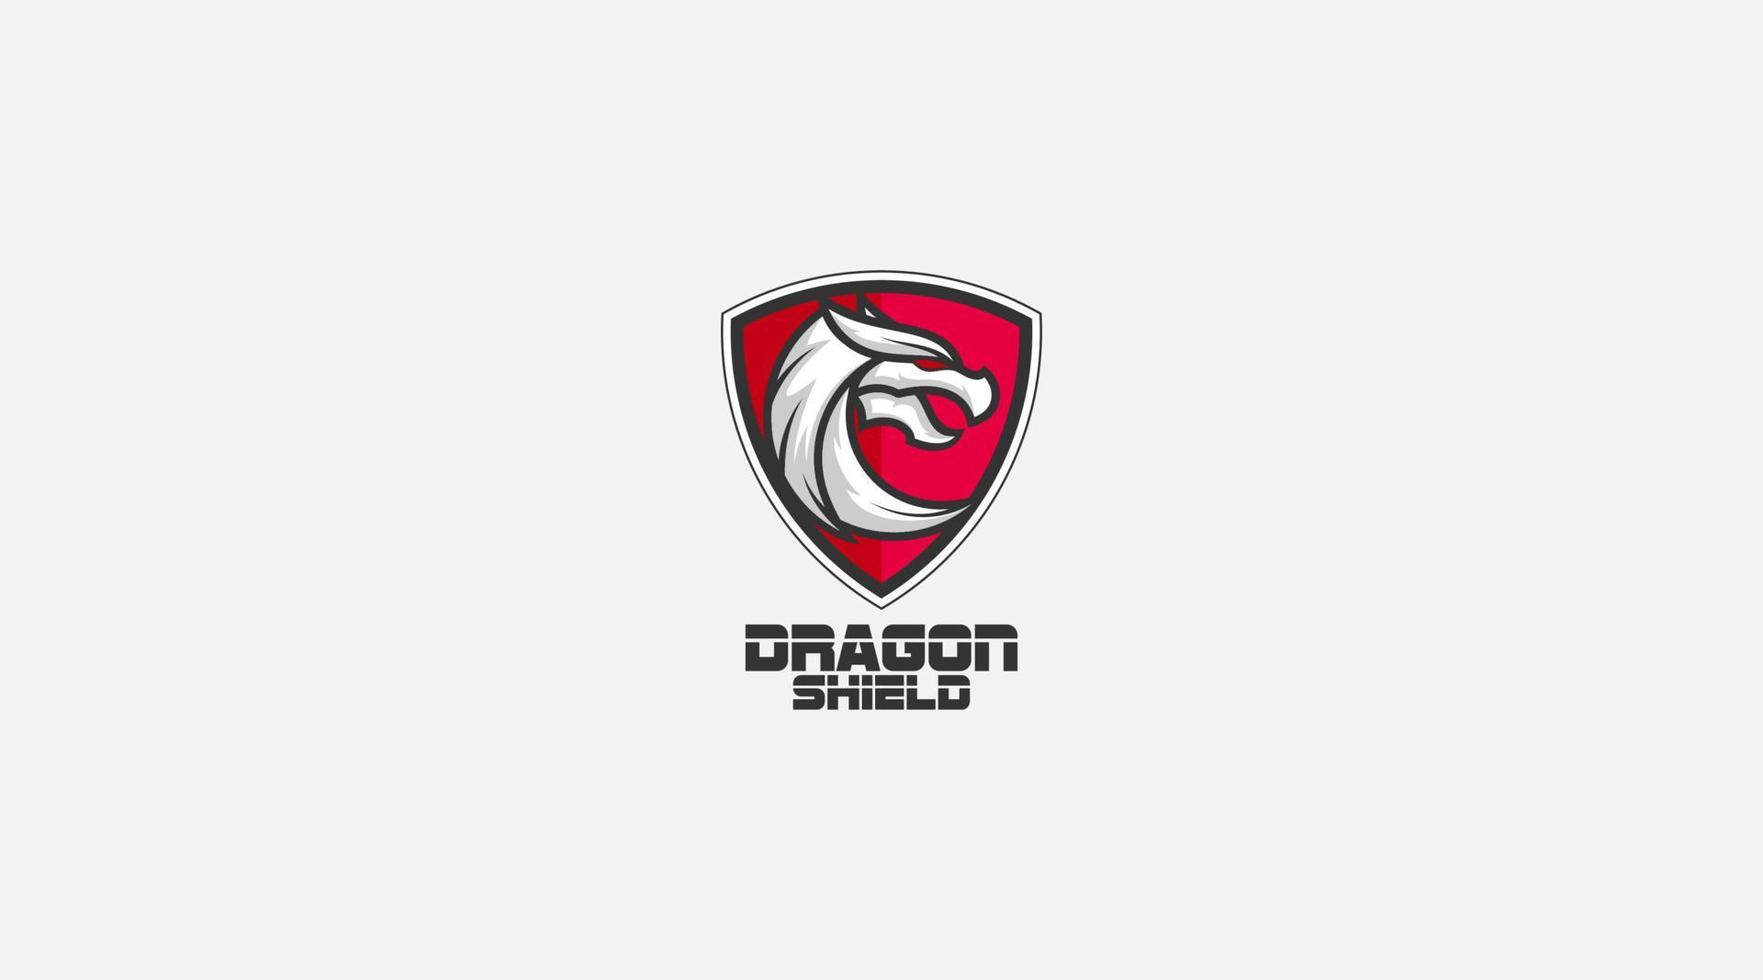 Dragon shield vector logo design illustration icon